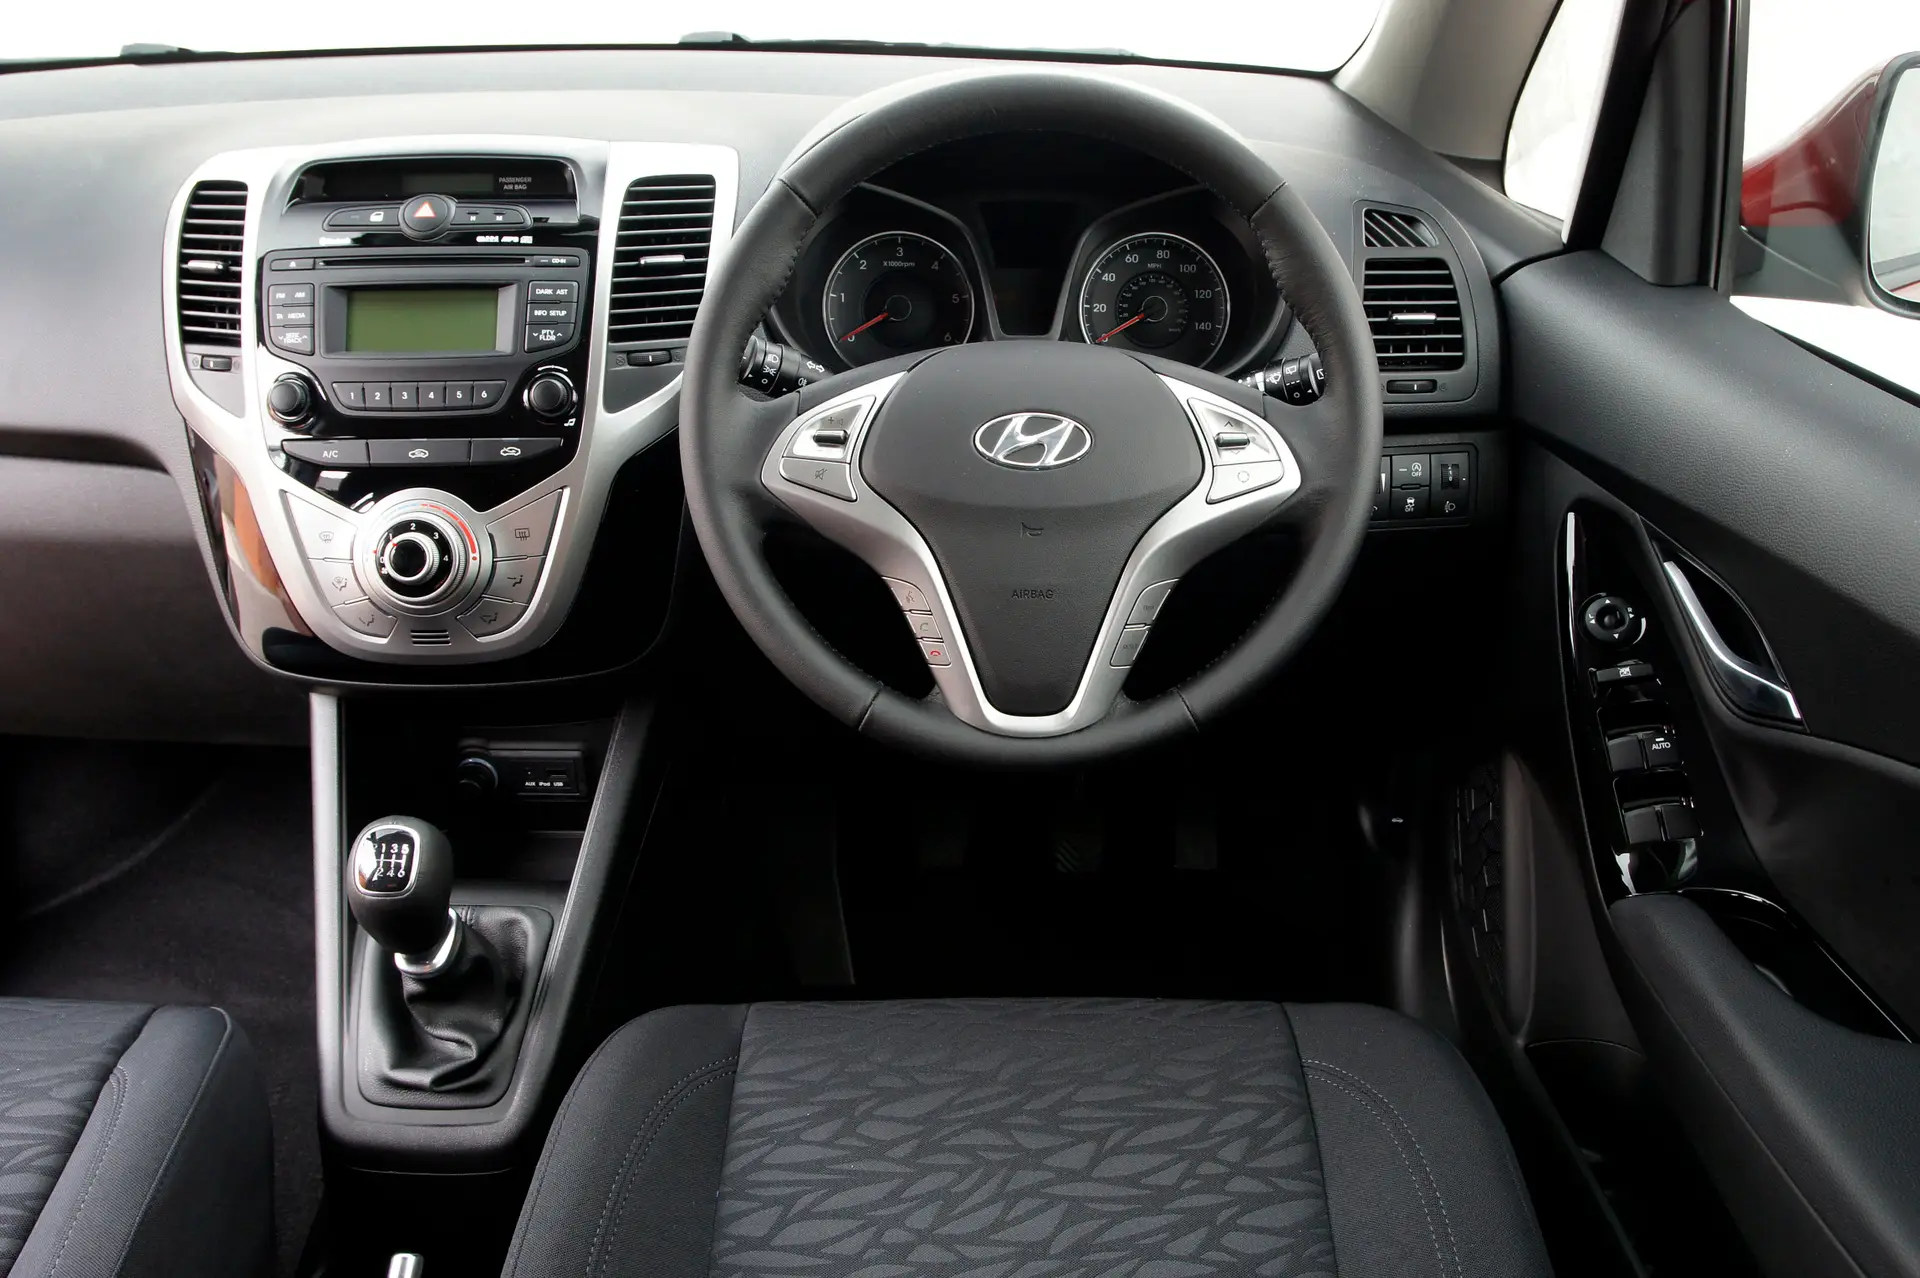 Hyundai ix20 (2010-2019) Review: interior close up photo of the Hyundai ix20 dashboard